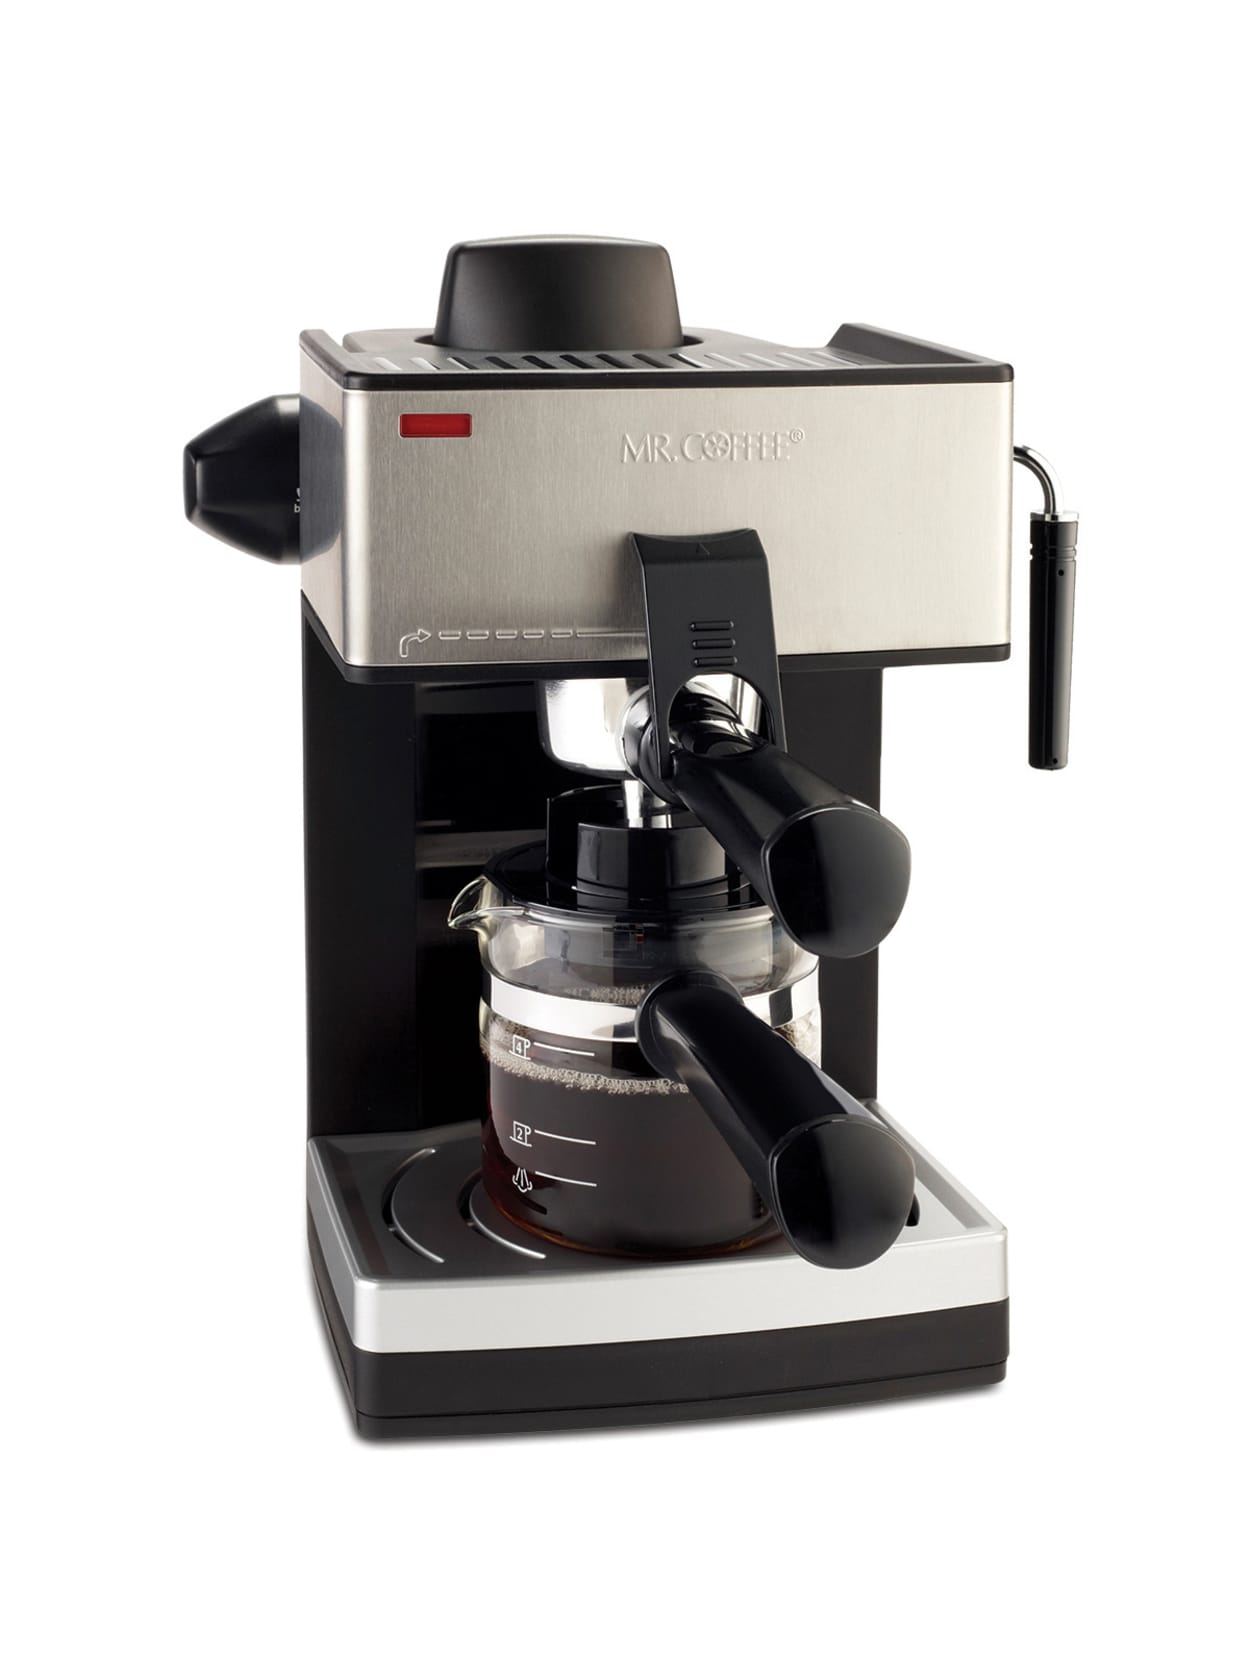 mr coffee ecm10 espresso maker manual